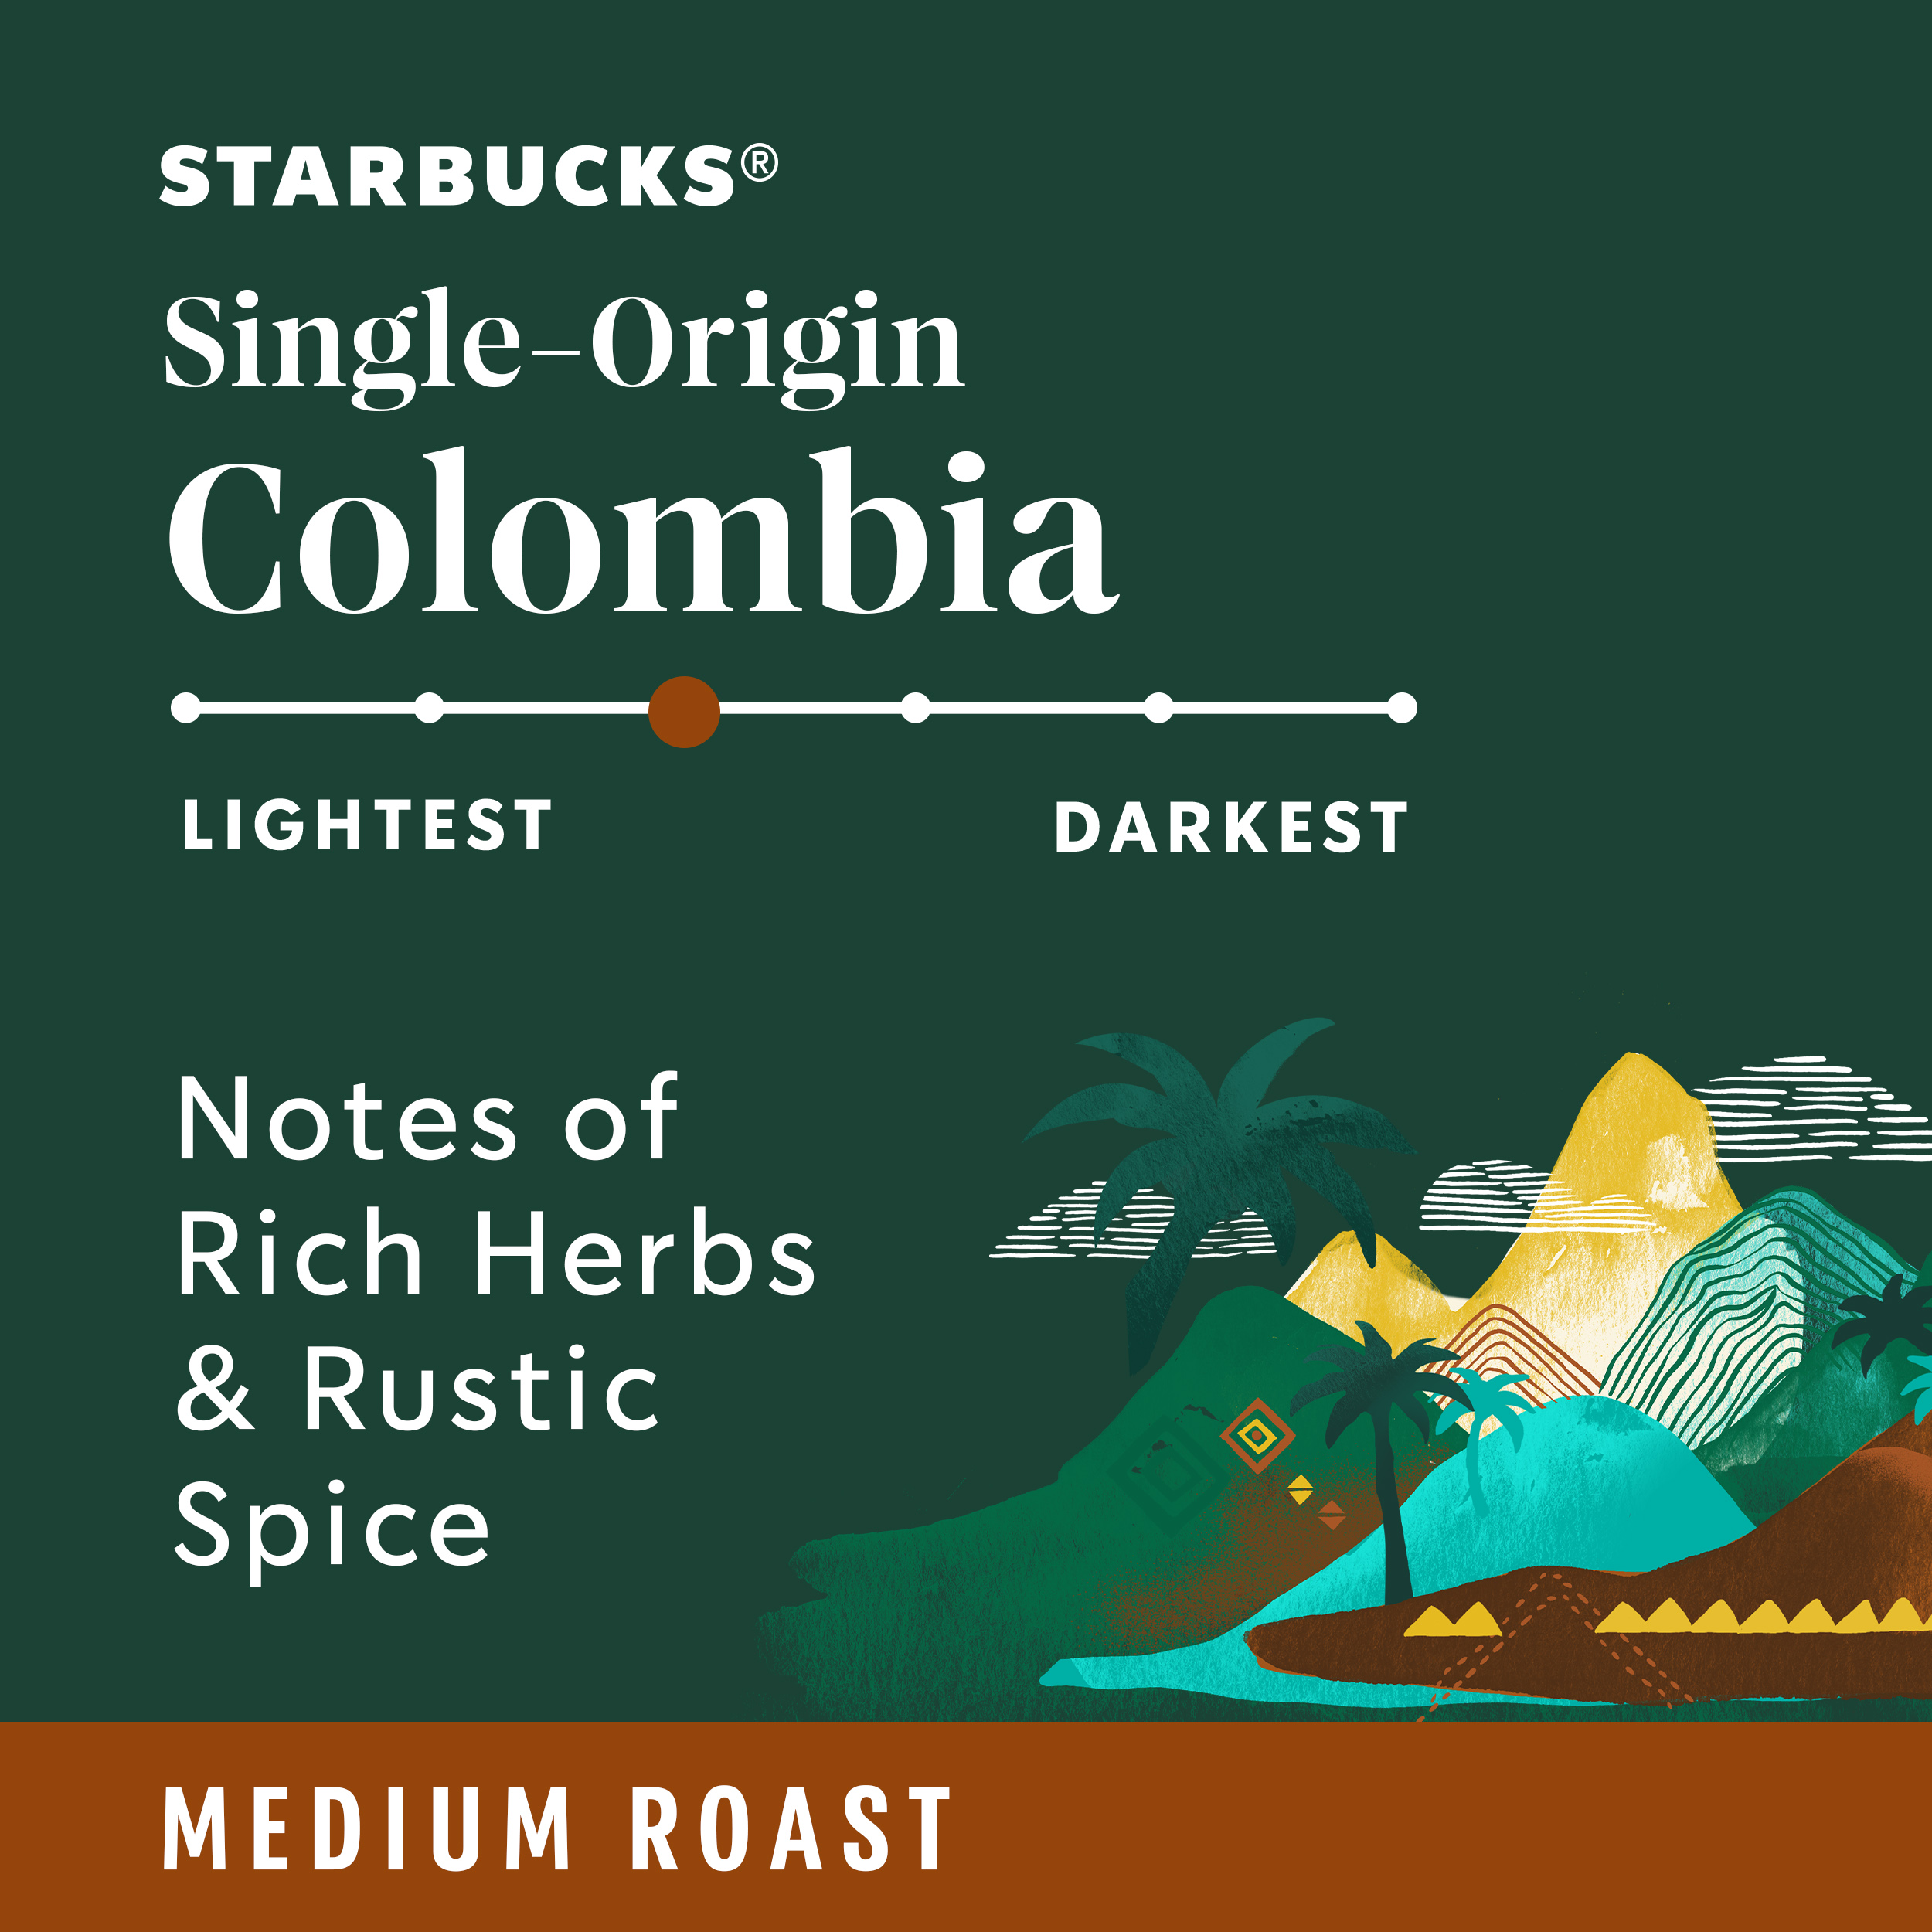 Starbucks Colombia Ground Coffee, Medium Roast, 12 oz - image 3 of 8